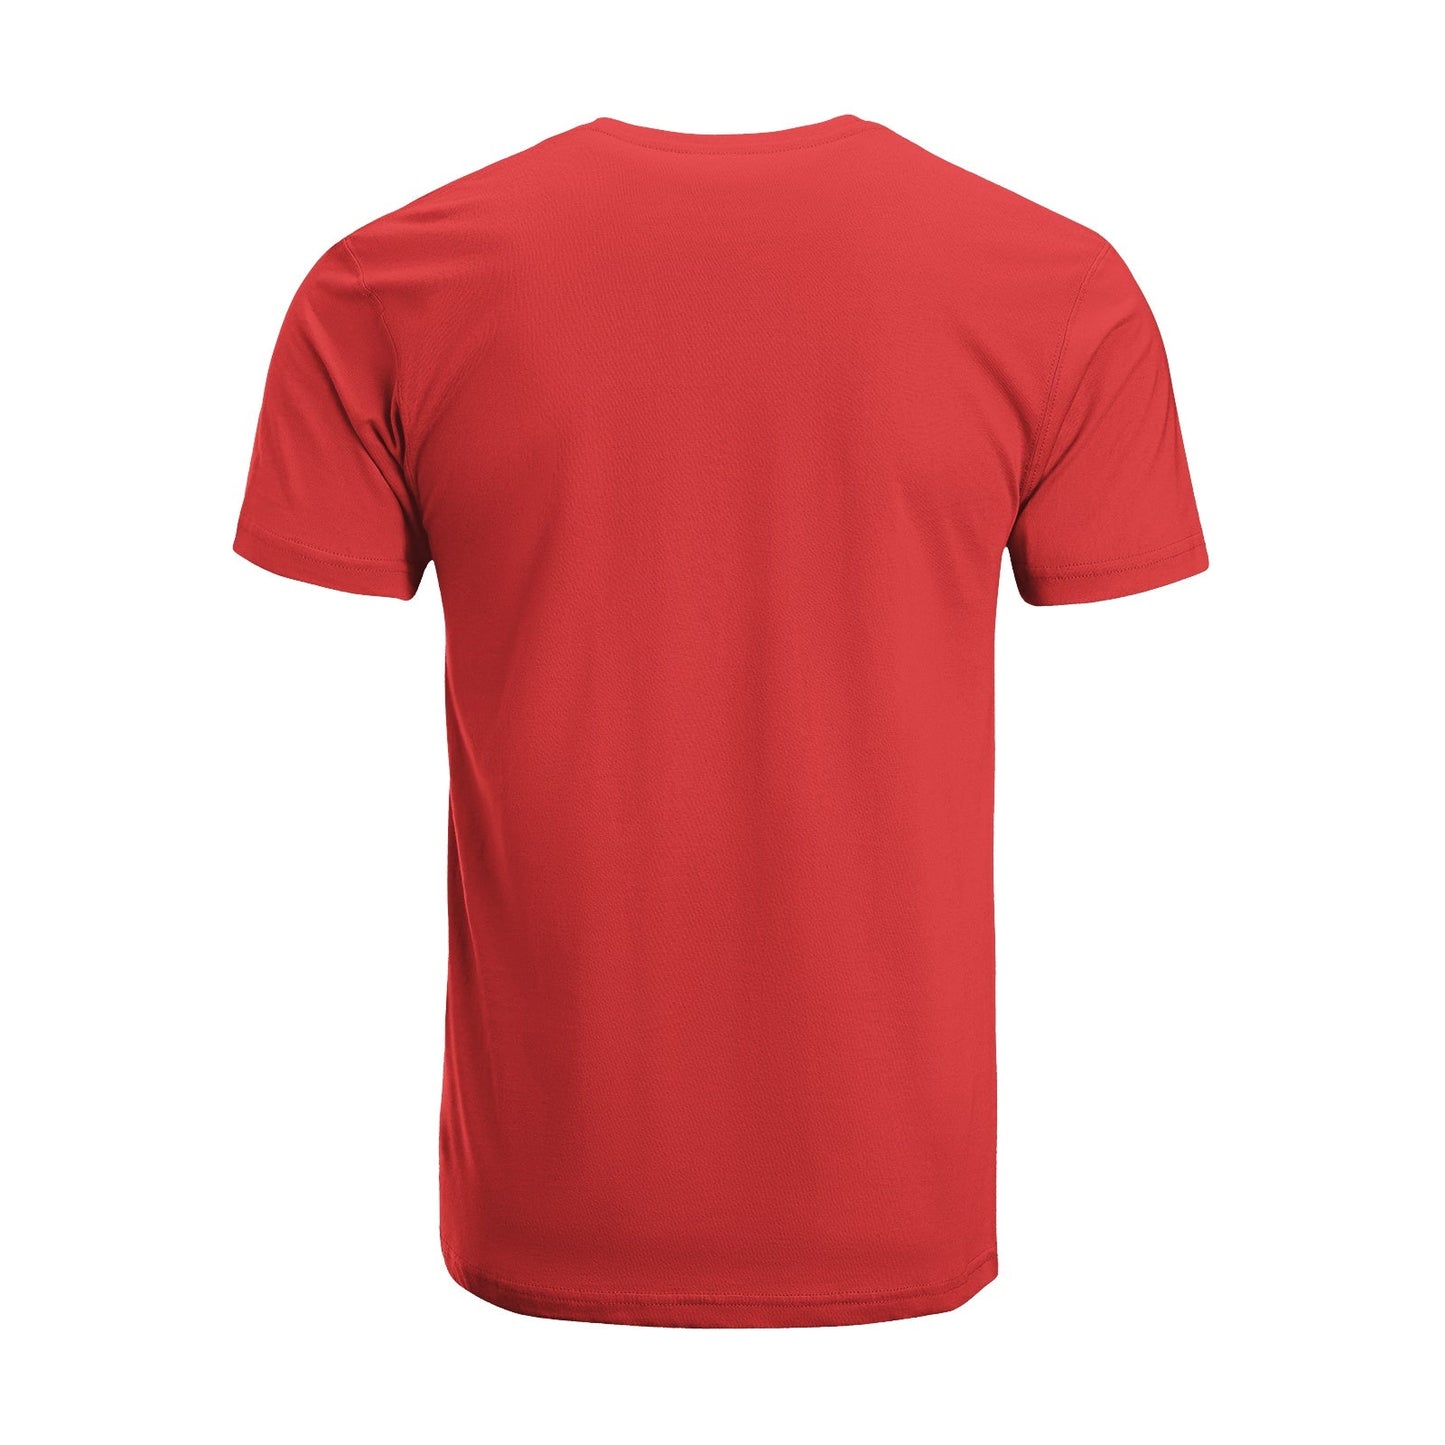 Unisex Short Sleeve Crew Neck Cotton Jersey T-Shirt CAT 35 - Tara-Outfits.com